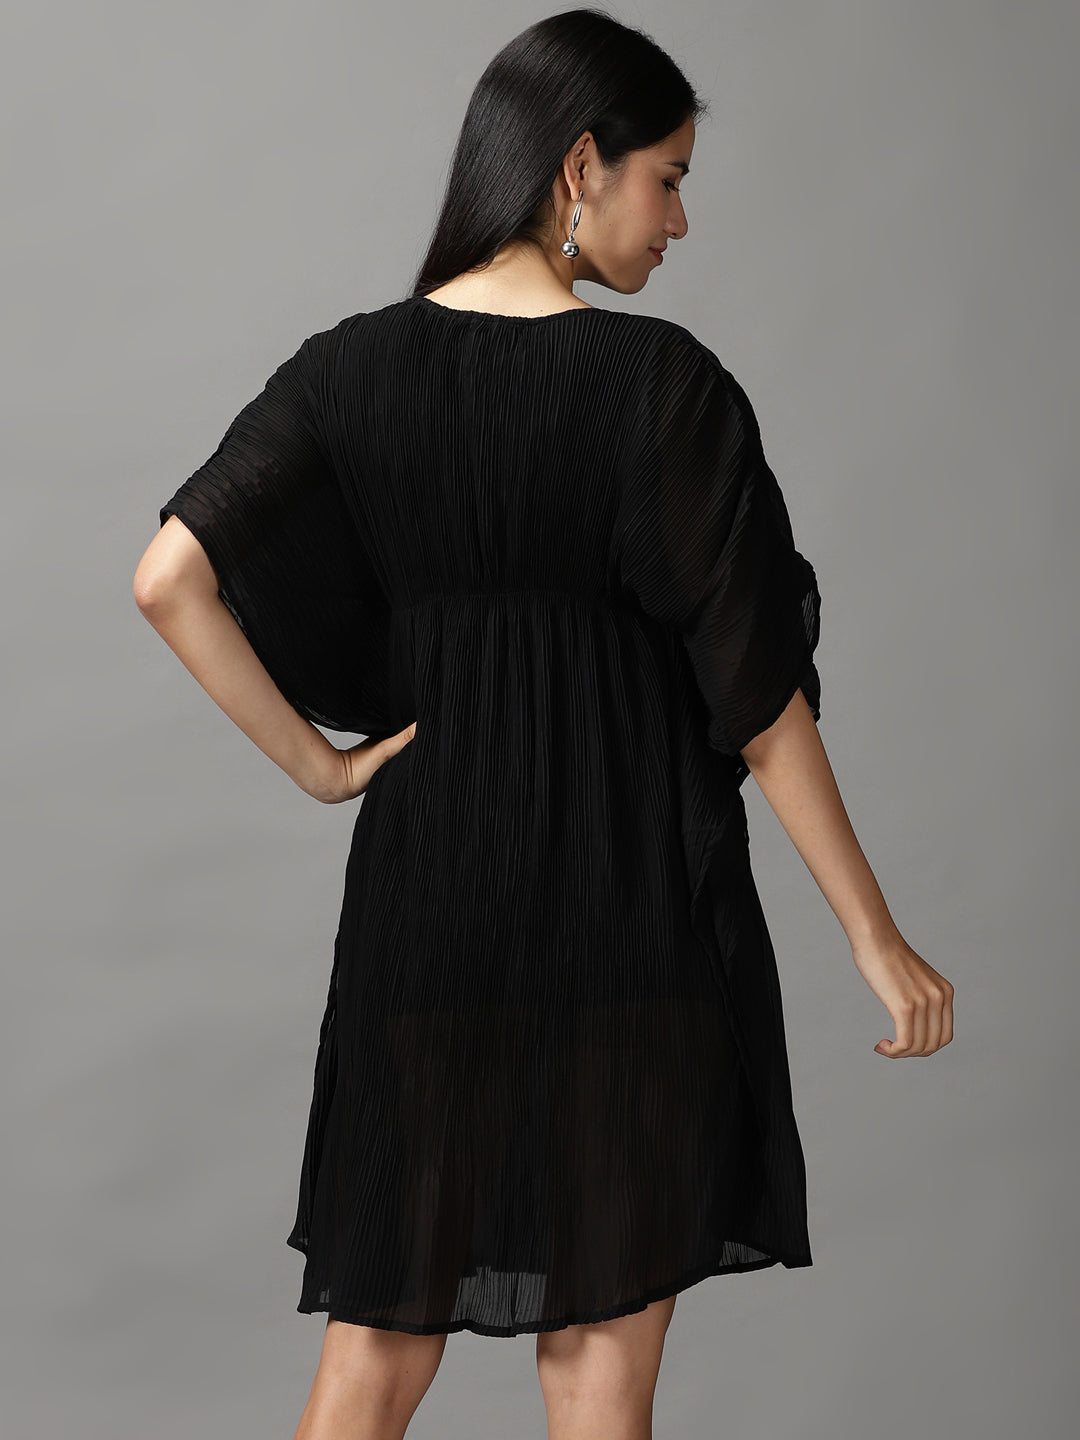 Women's Black Solid Kaftan Dress